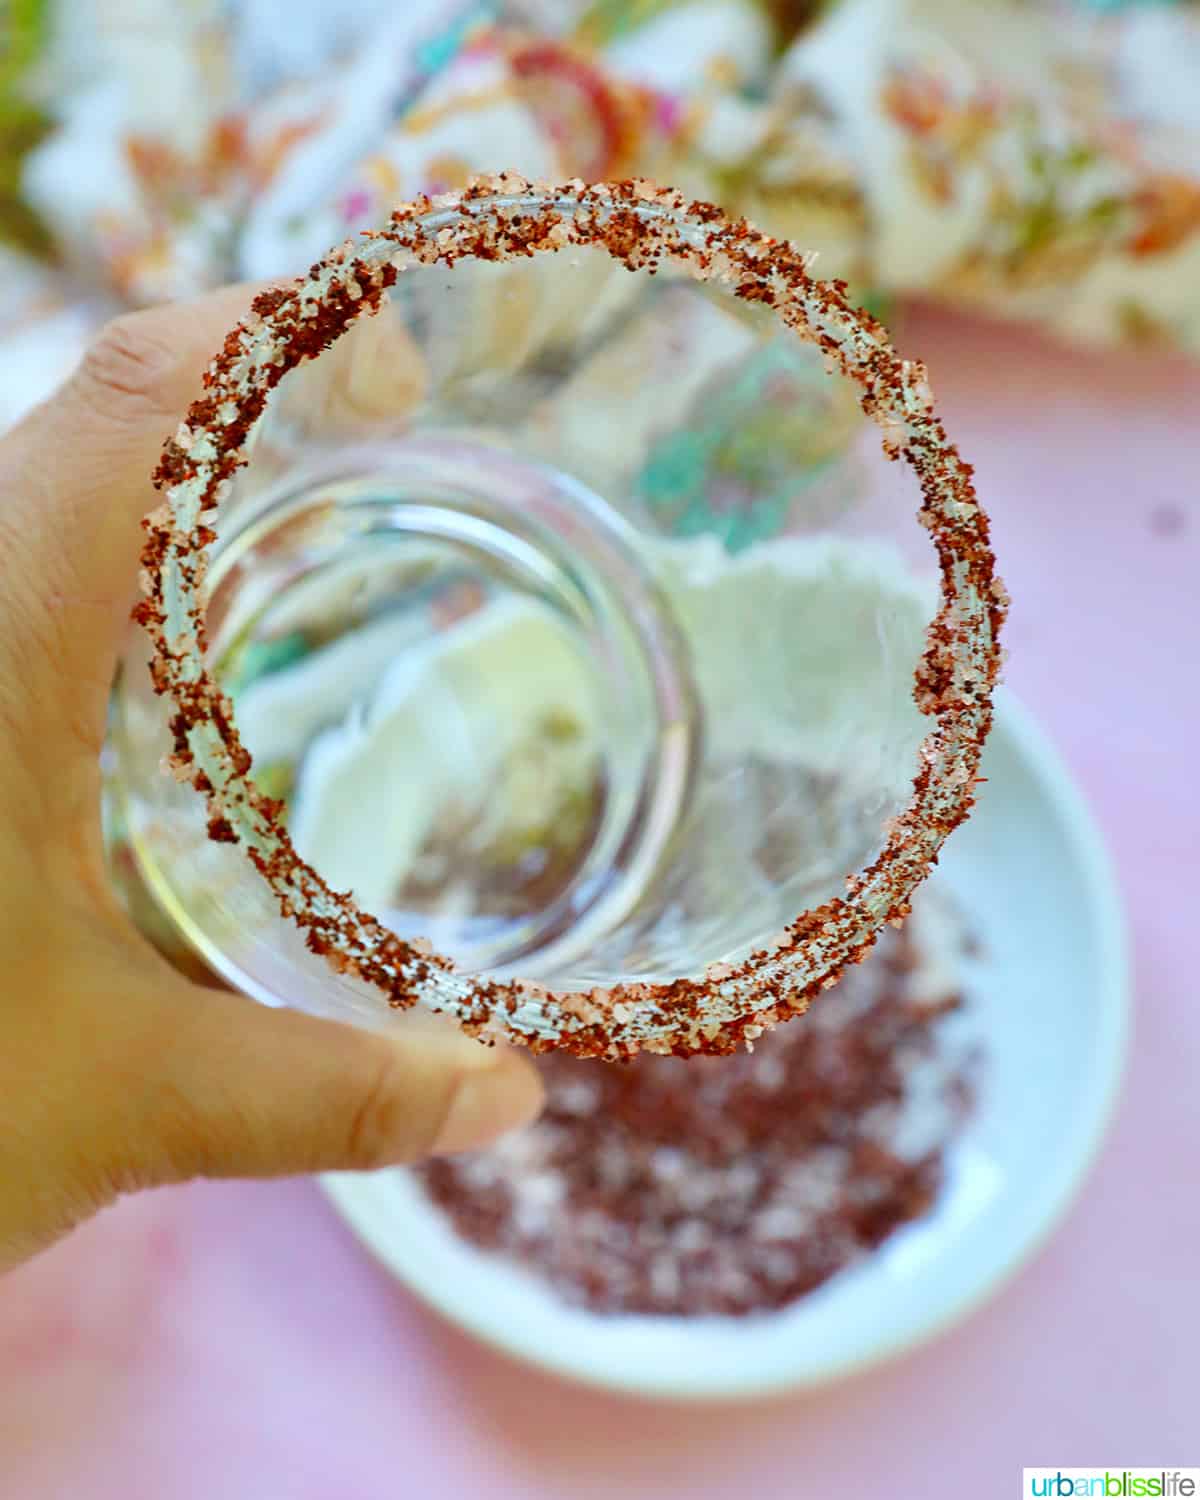 hand holding a glass with chili powder salt around the rim.